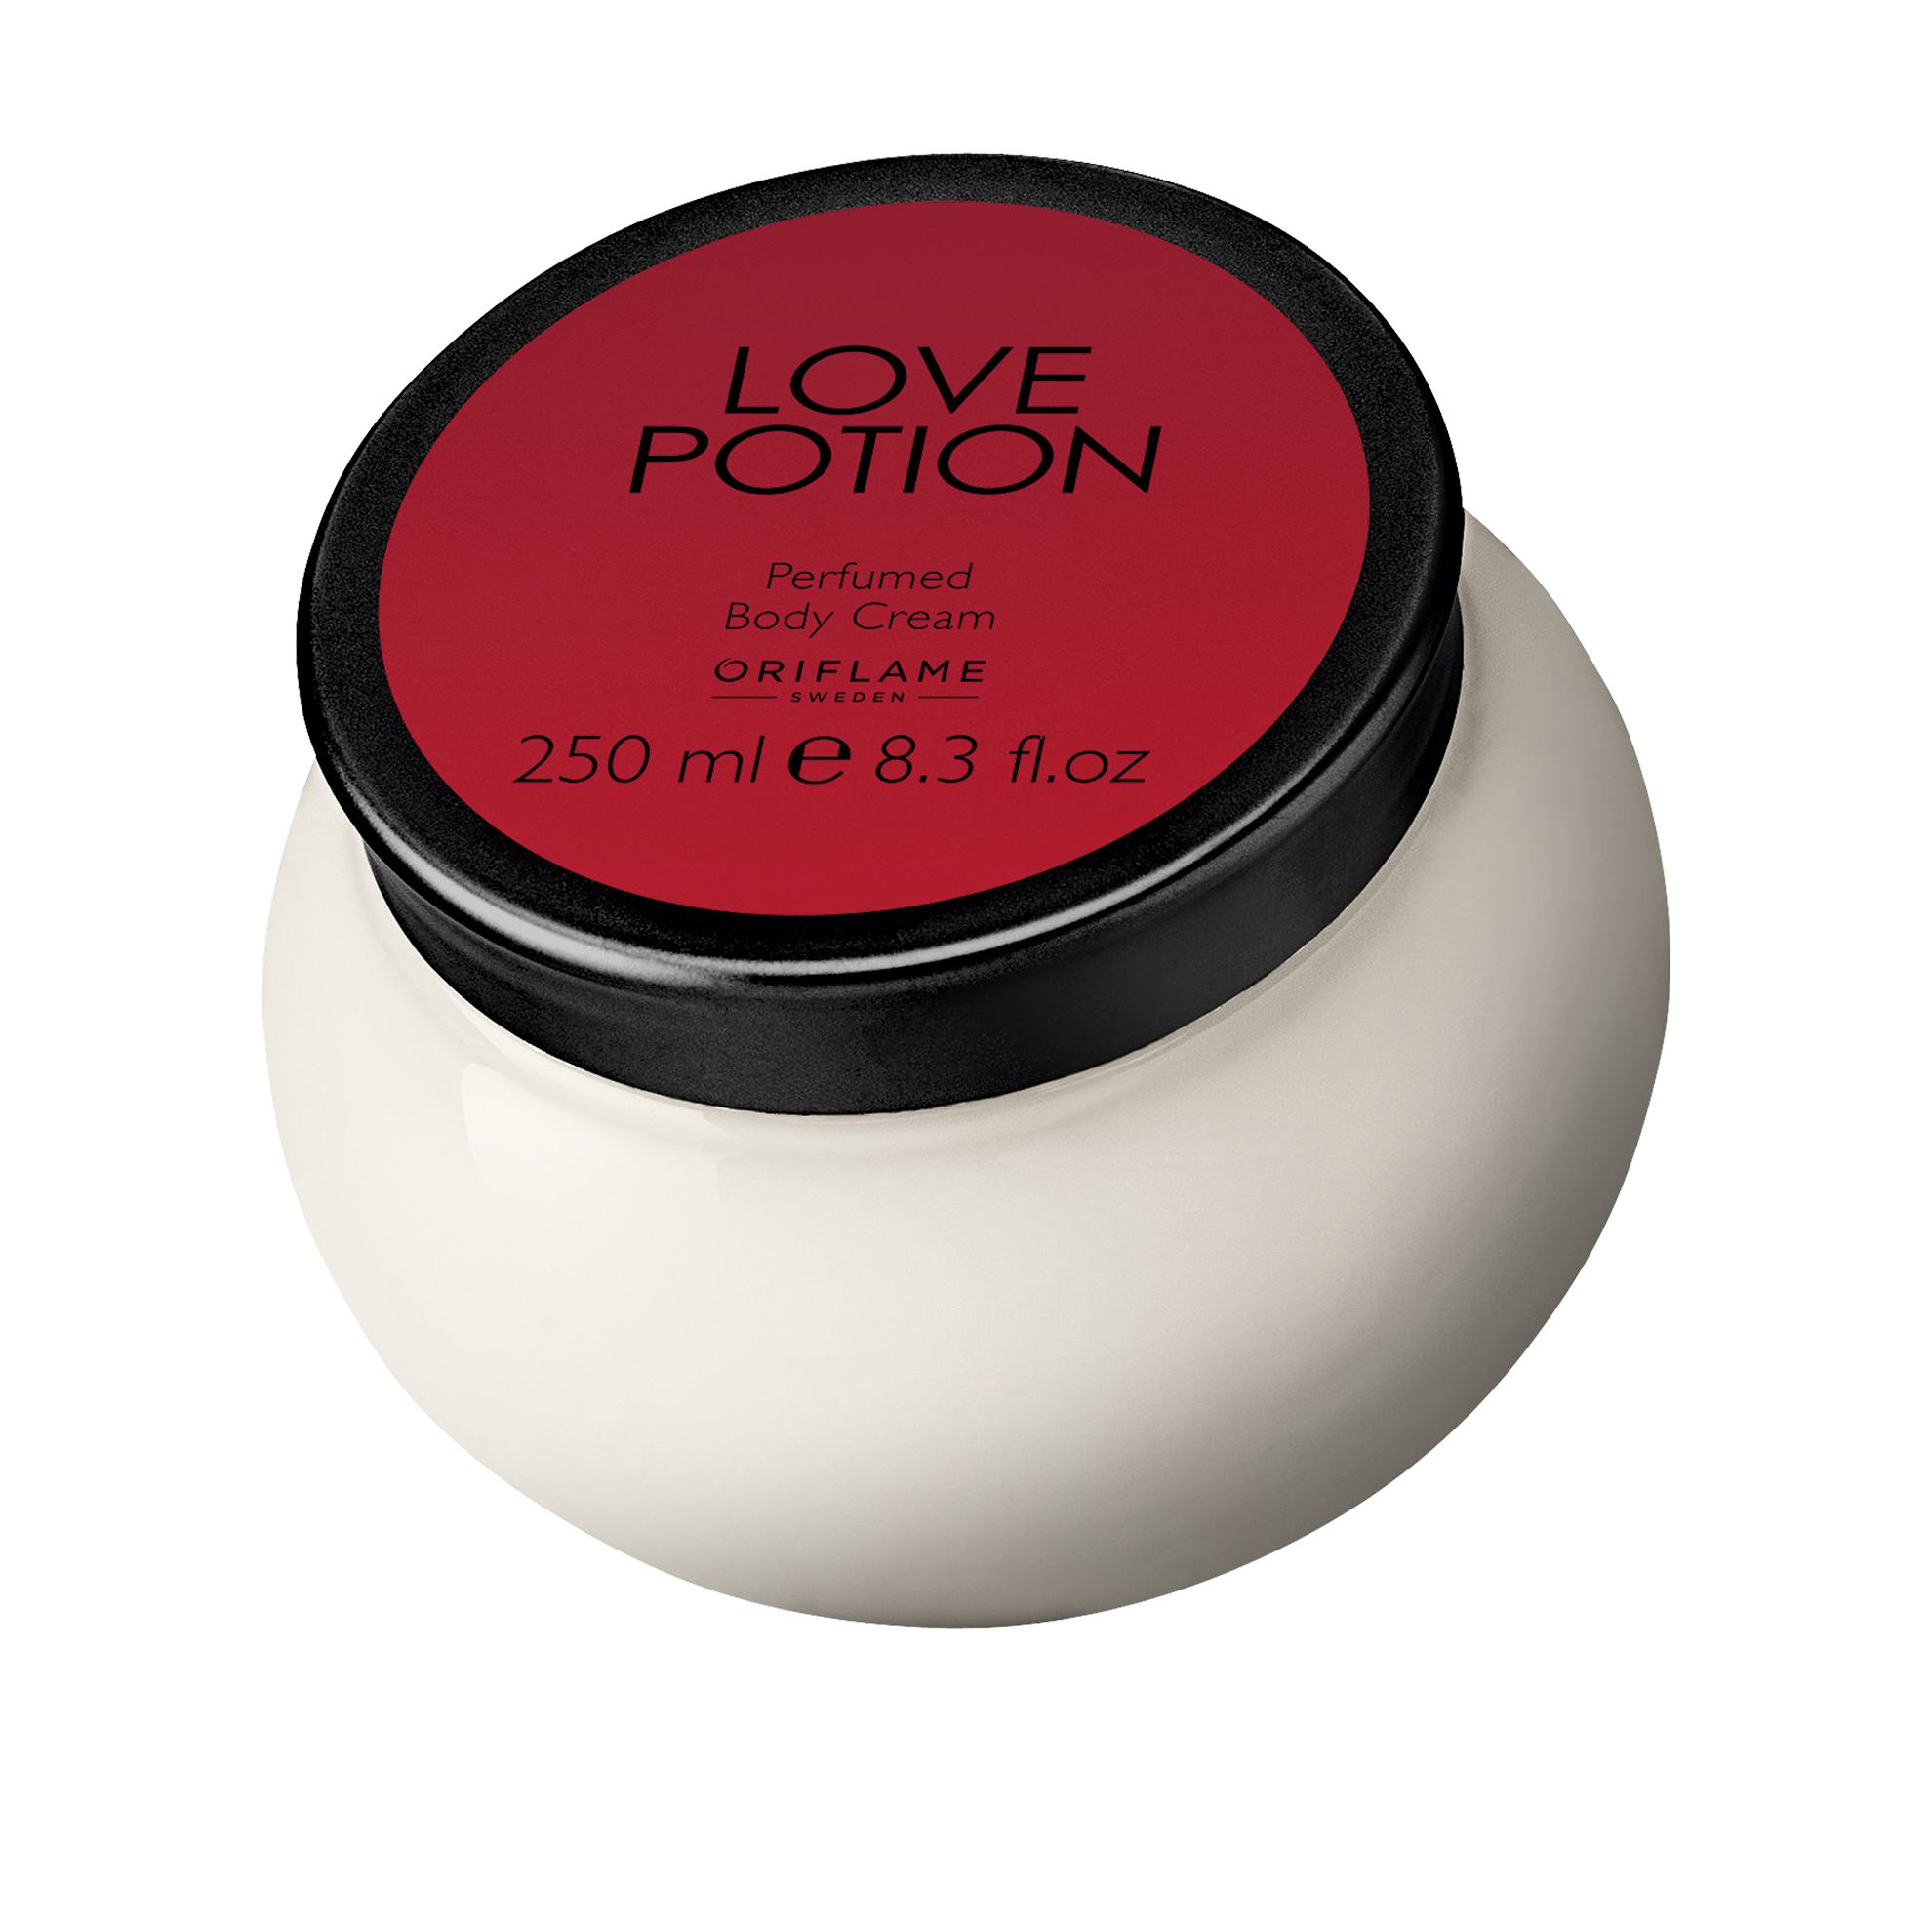 Perfumed Body Cream (42509) body-moisturiser – Chăm Sóc Cá Nhân | Oriflame cosmetics